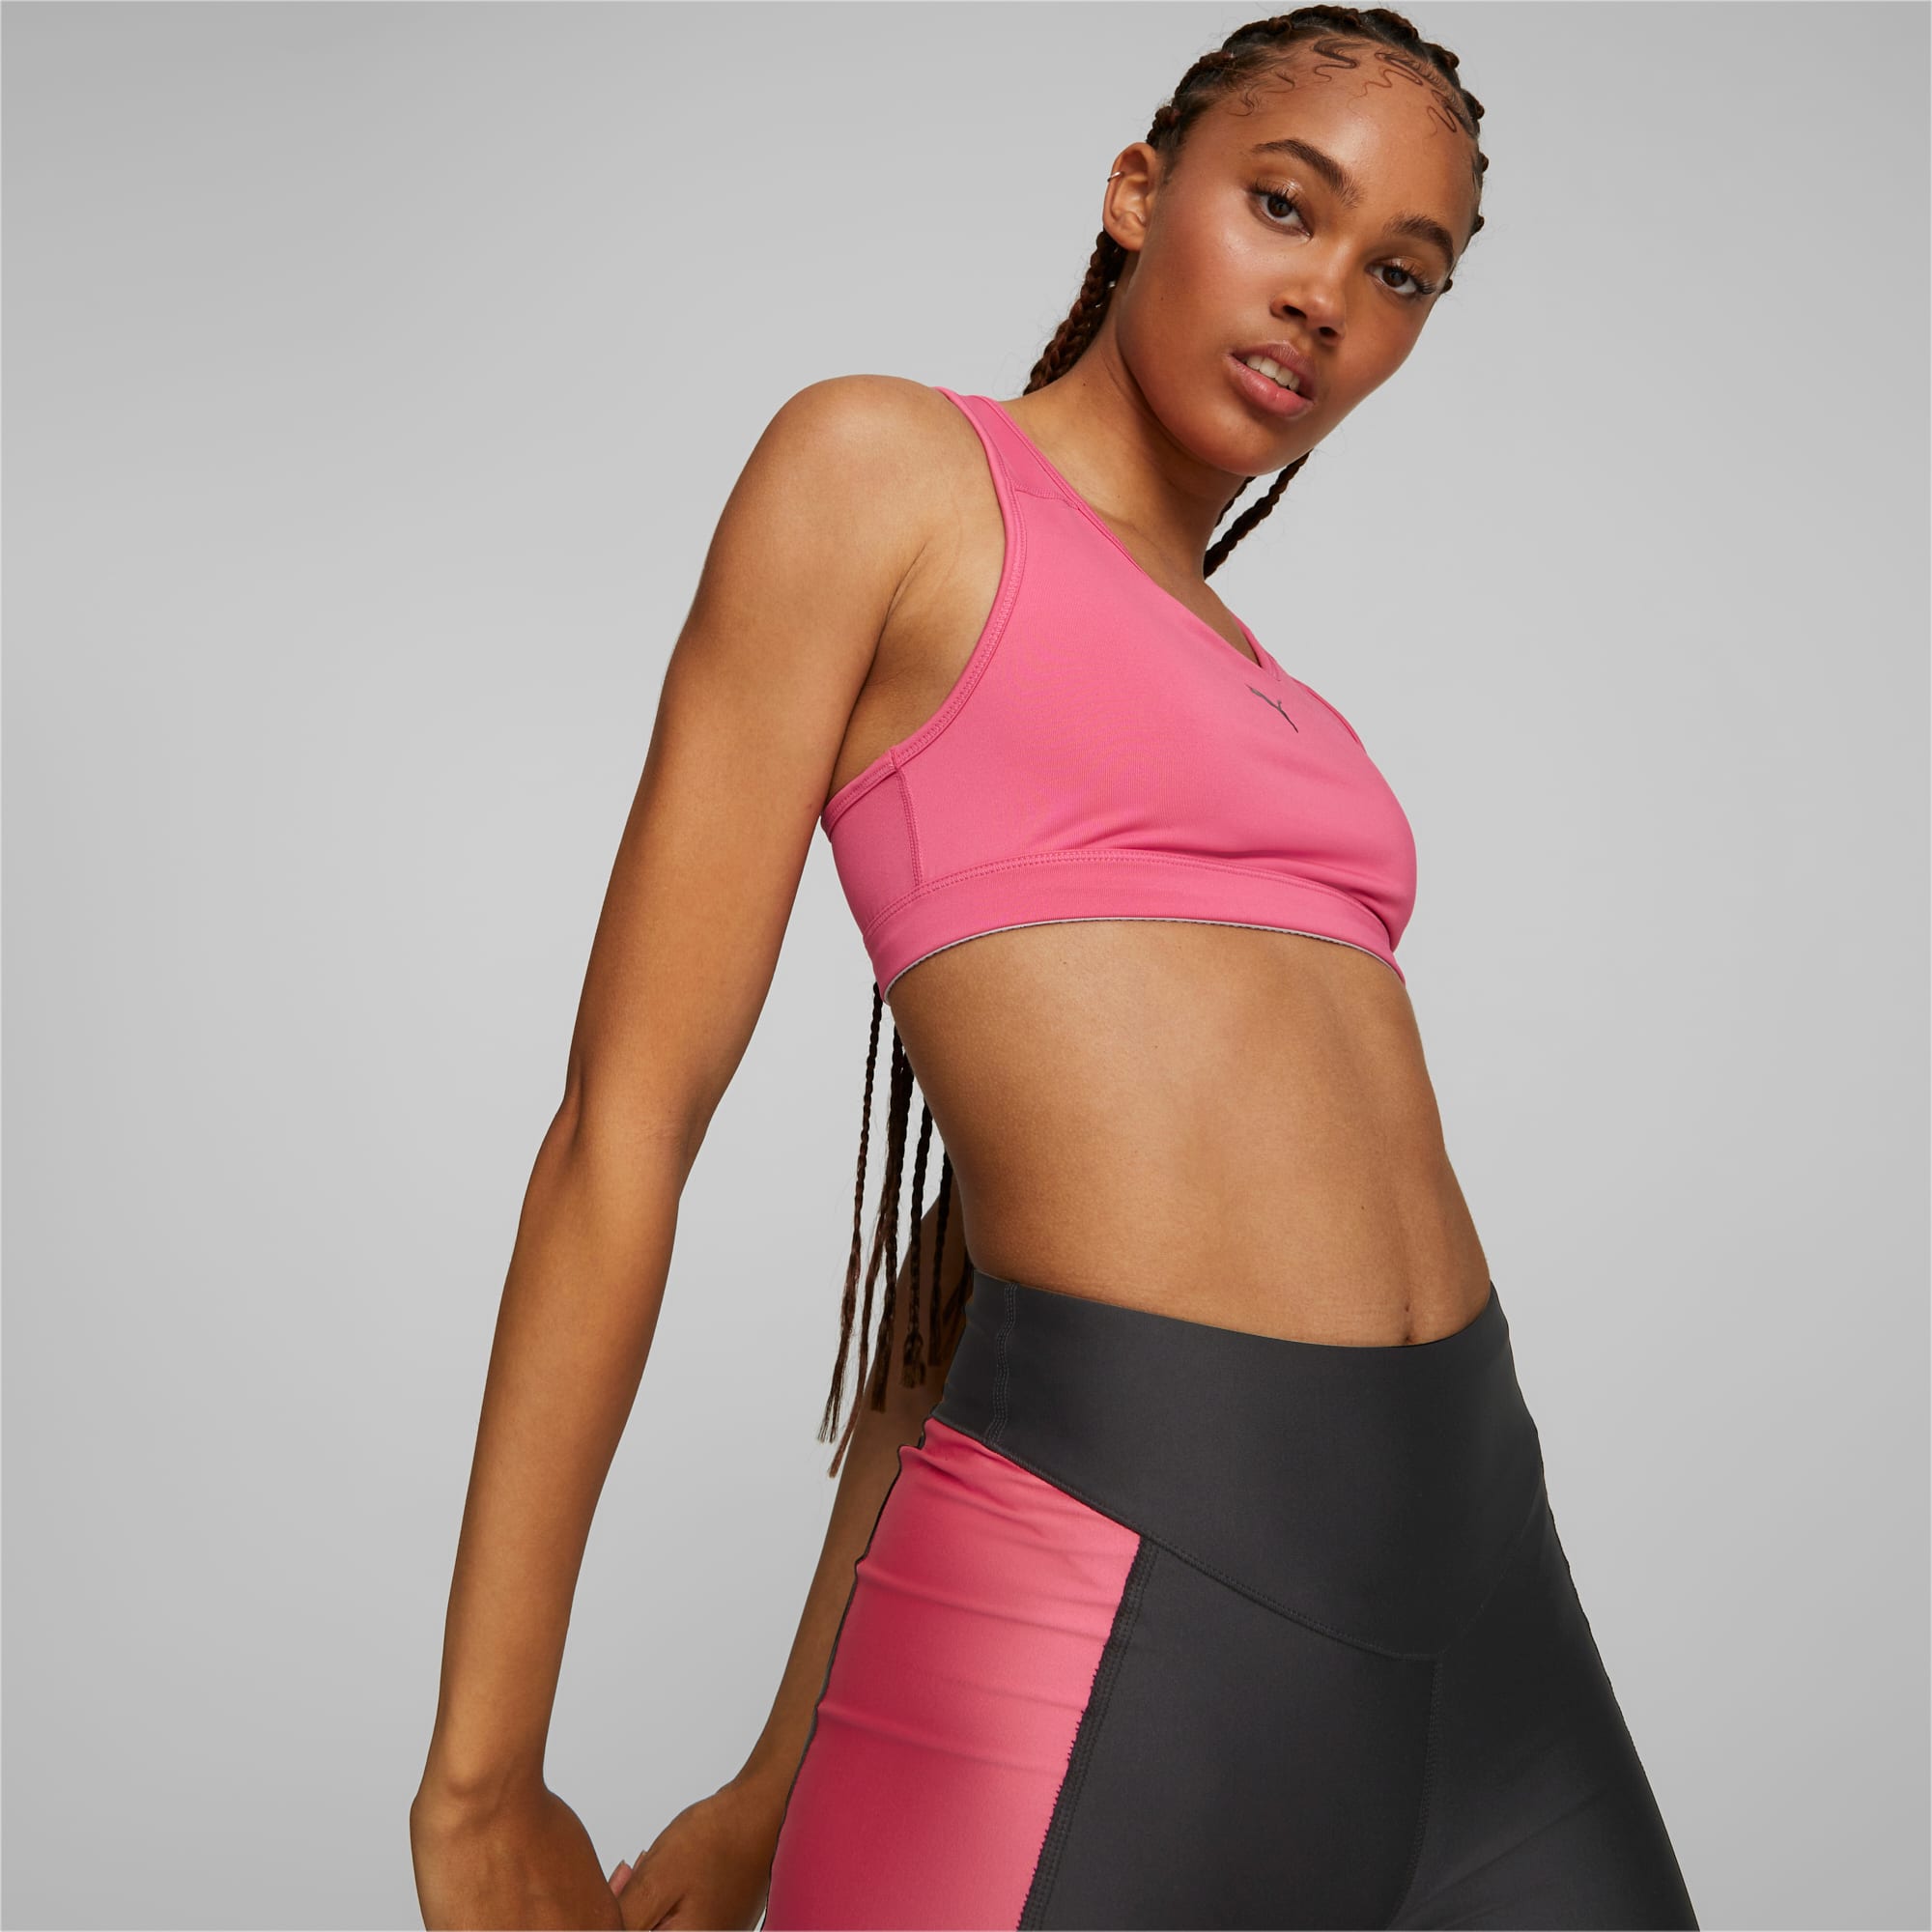 ♡ Nike Workout Clothing, Yoga Tops, Sports Bra